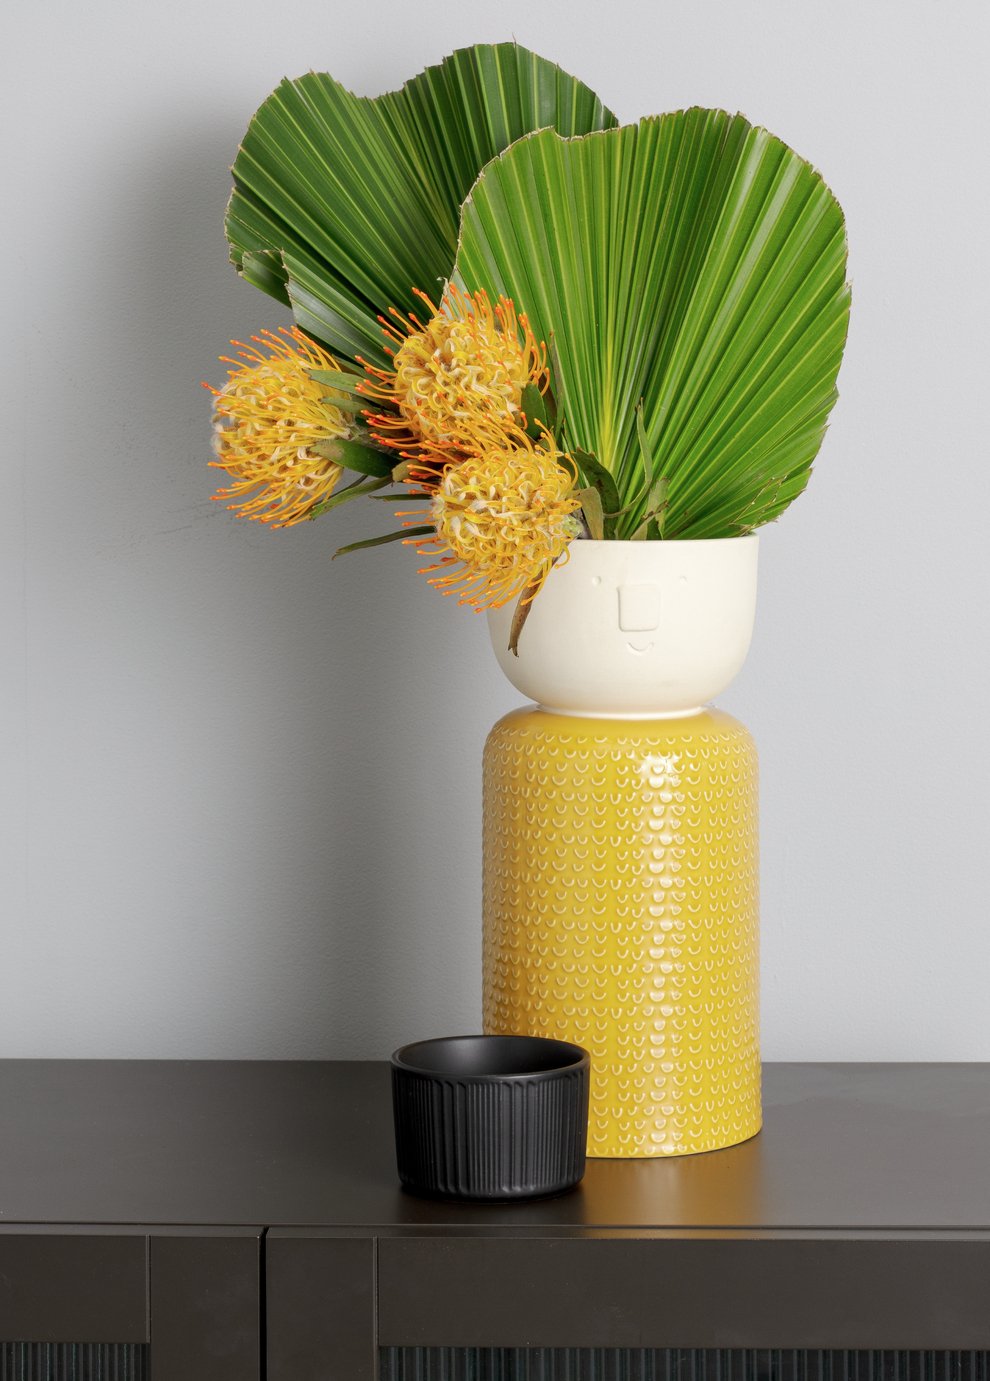 Argos Home Novelty Face Vase Review